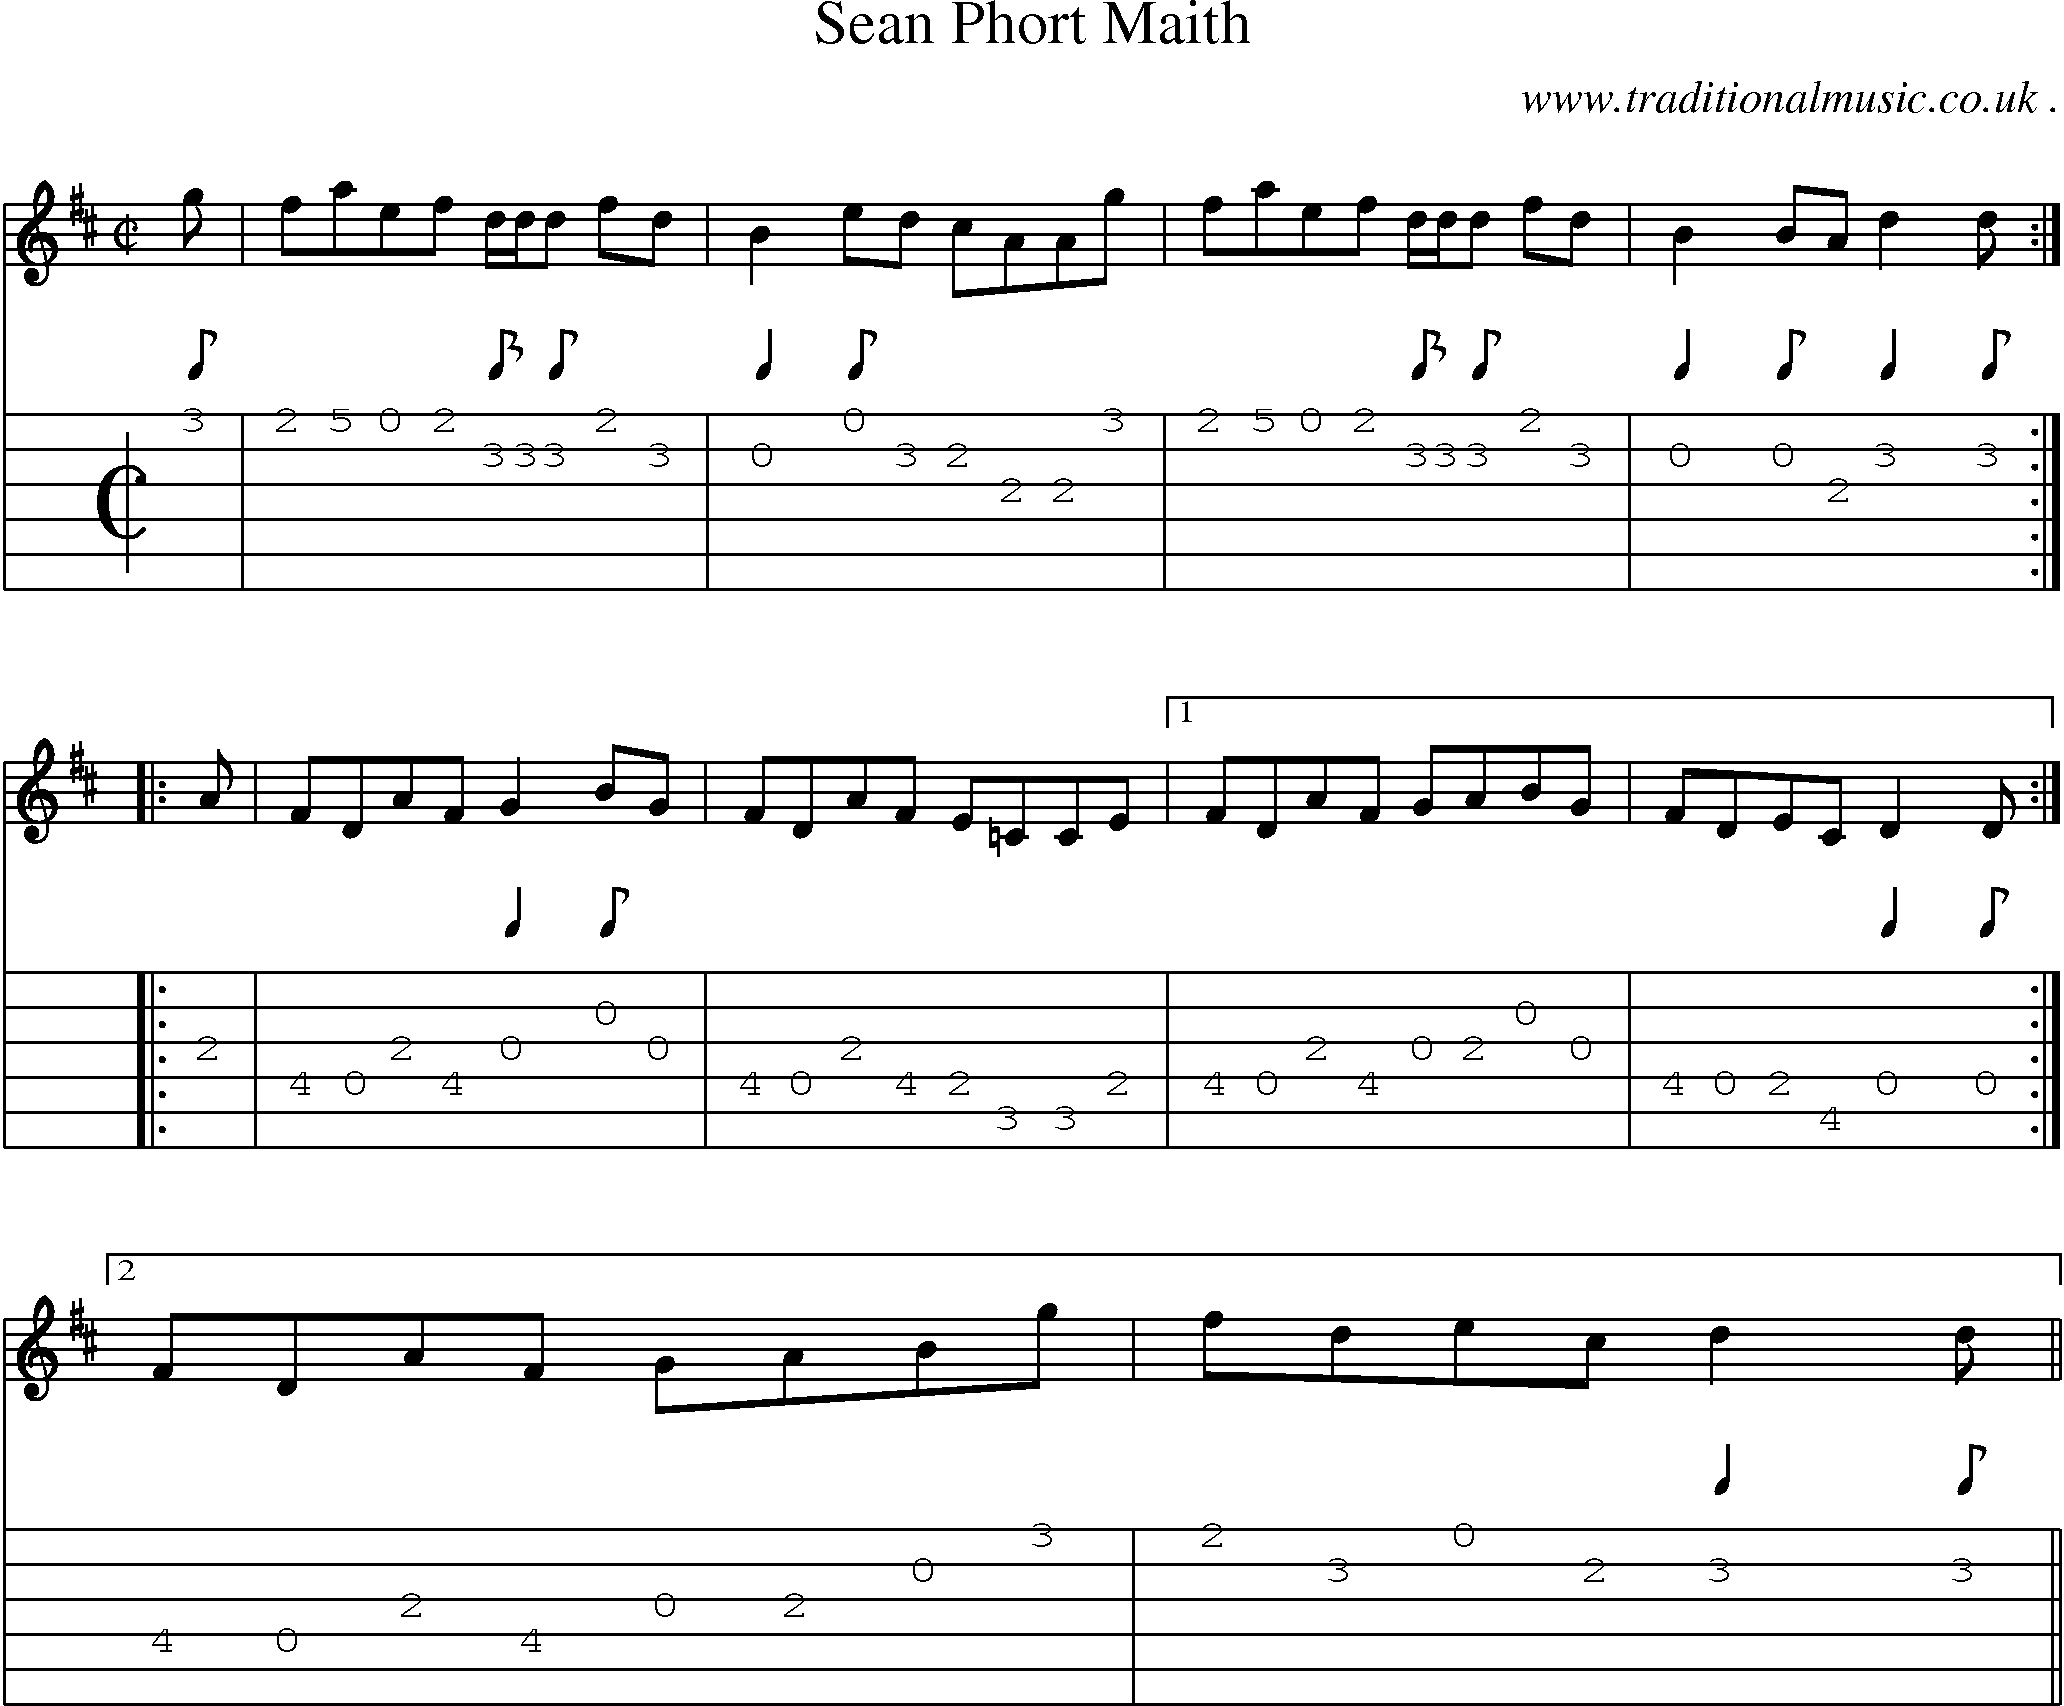 Sheet-music  score, Chords and Guitar Tabs for Sean Phort Maith